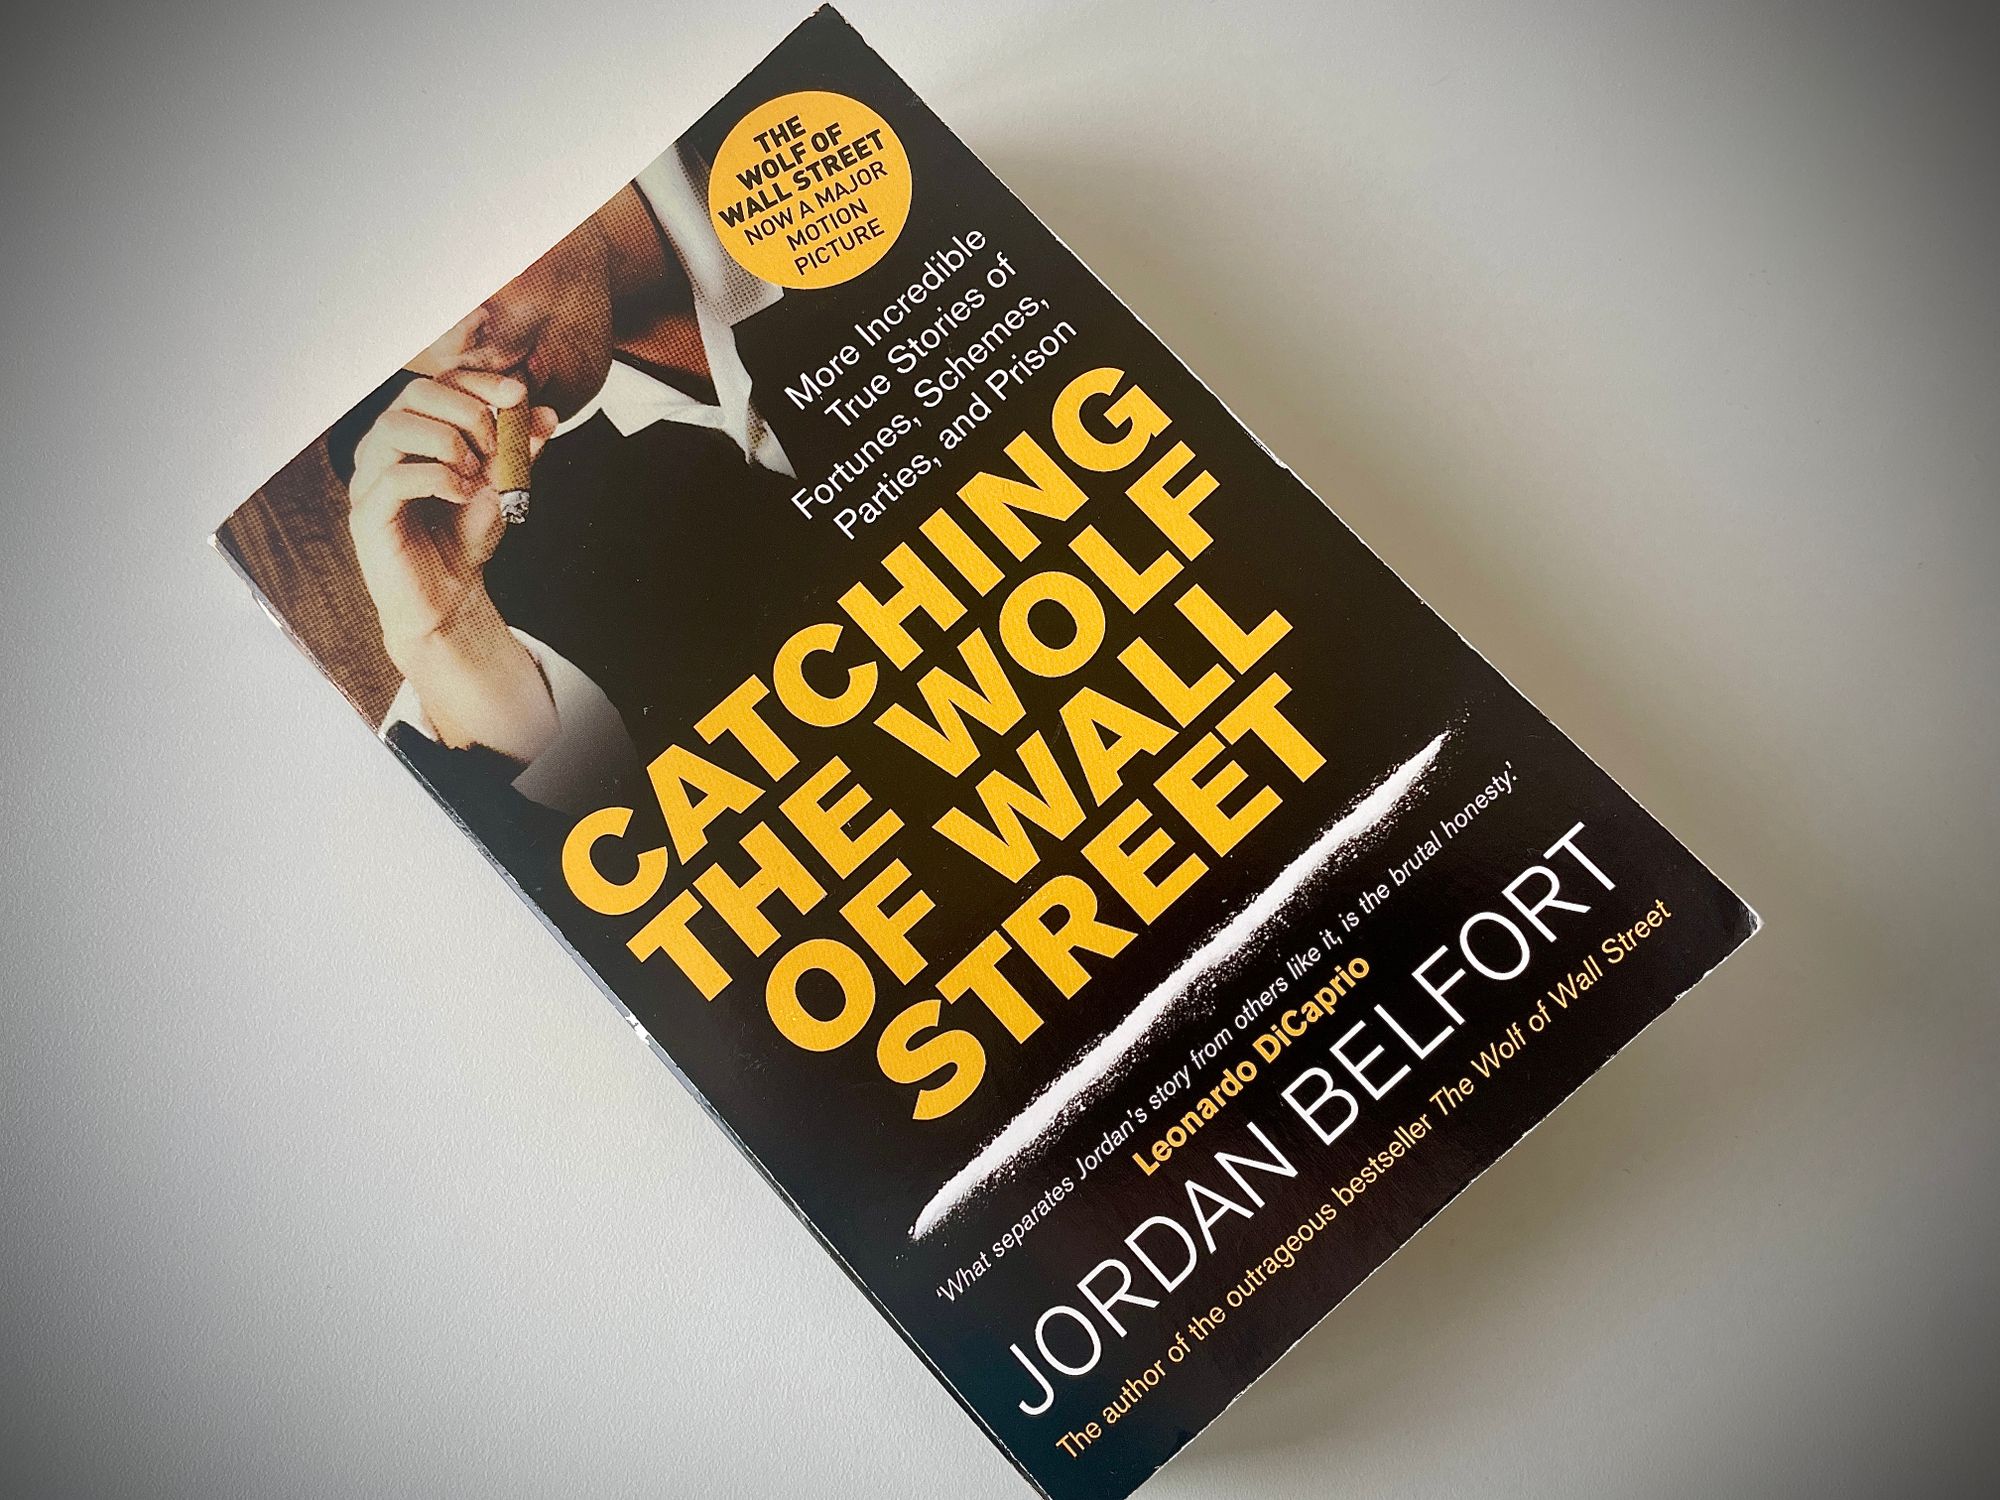 Catching the Wolf of Wall Street by Jordan Belfort